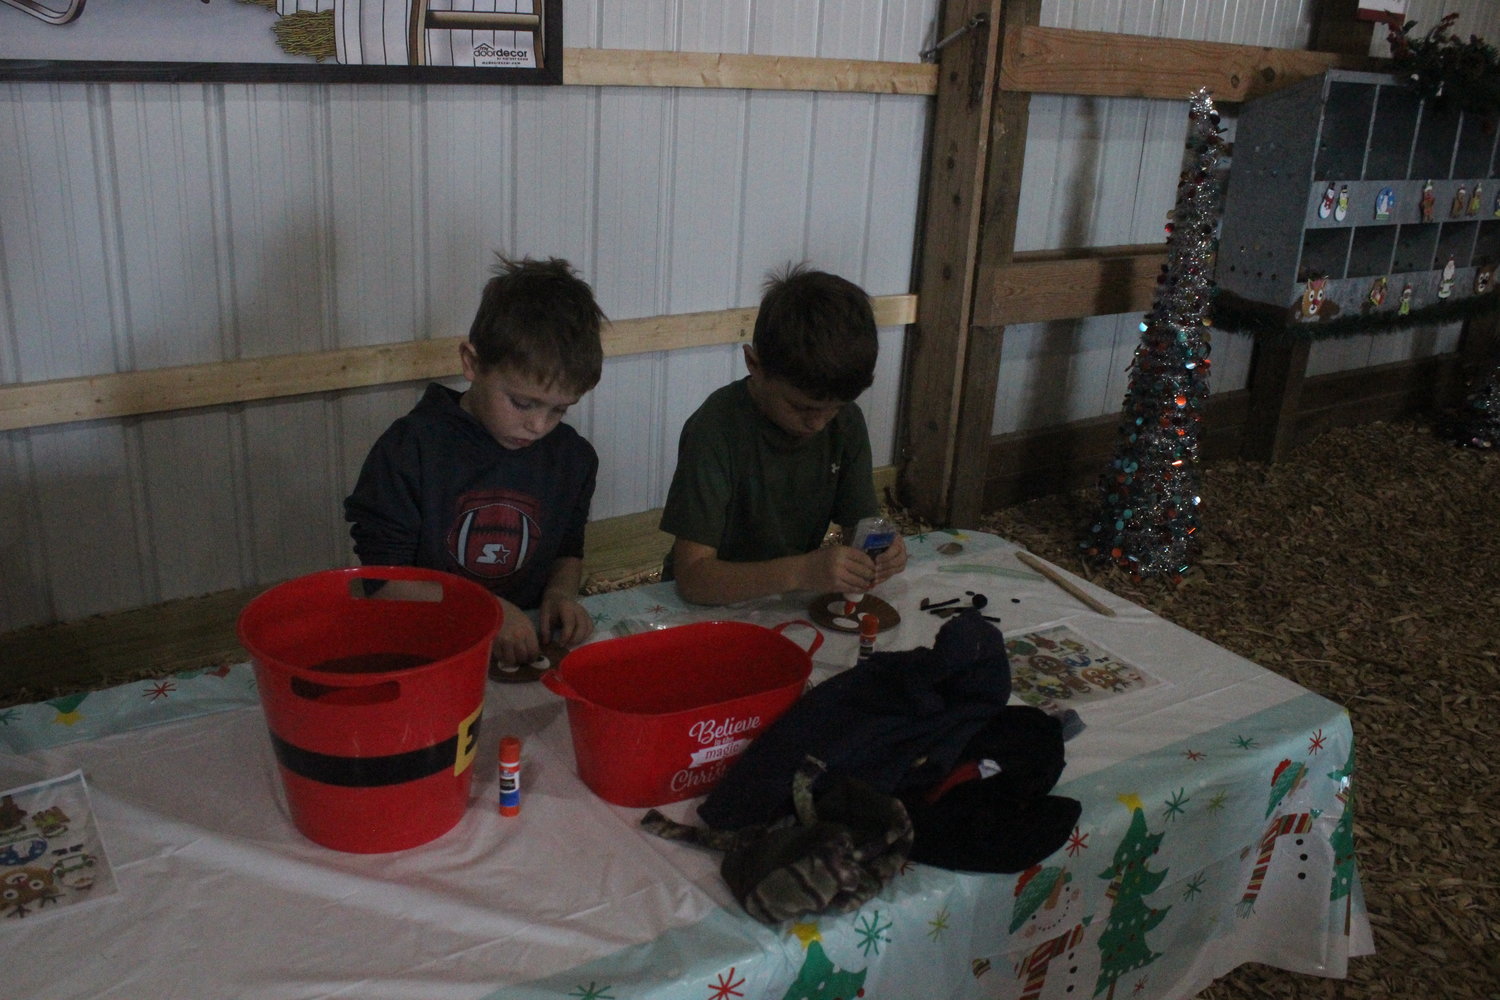 Two area kids enjoy a craft area.